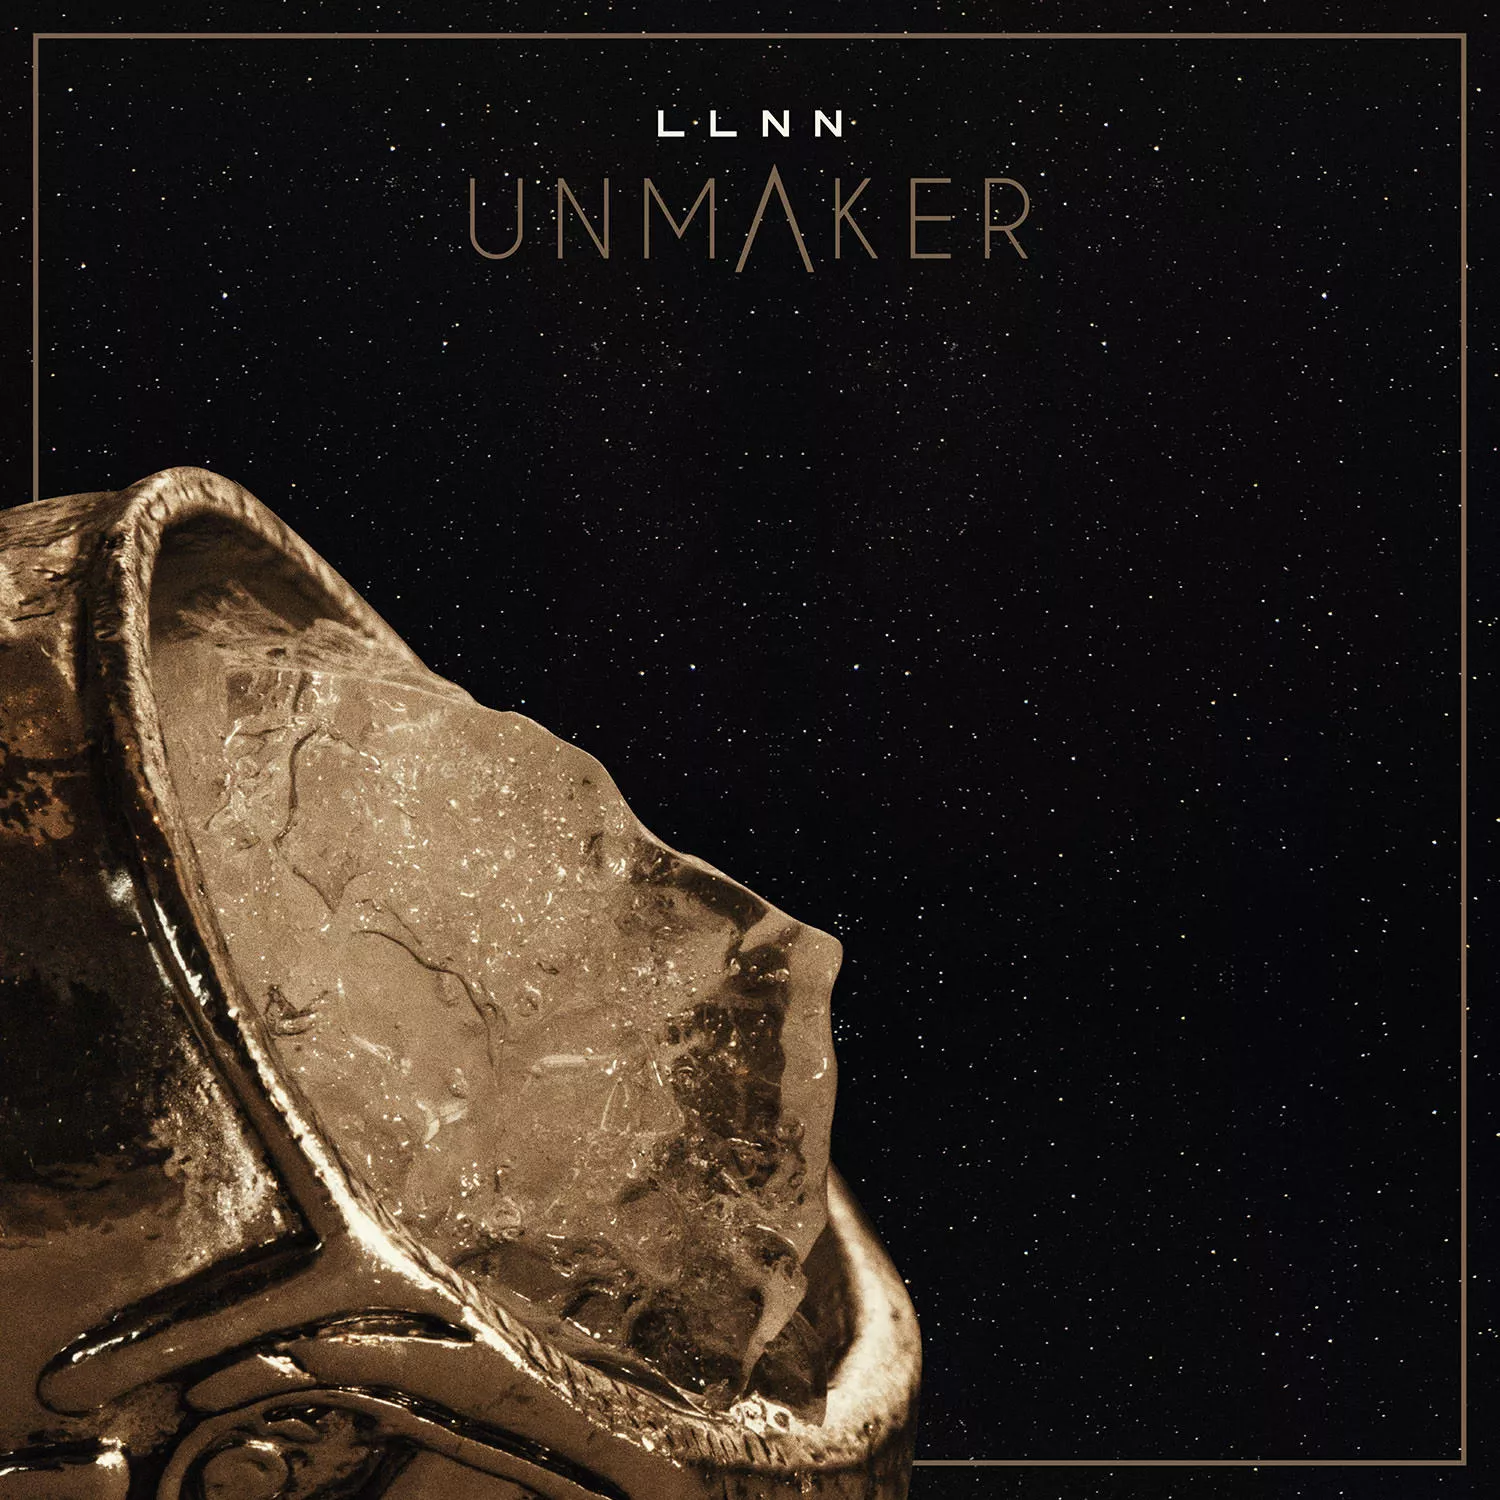 Unmaker - LLNN